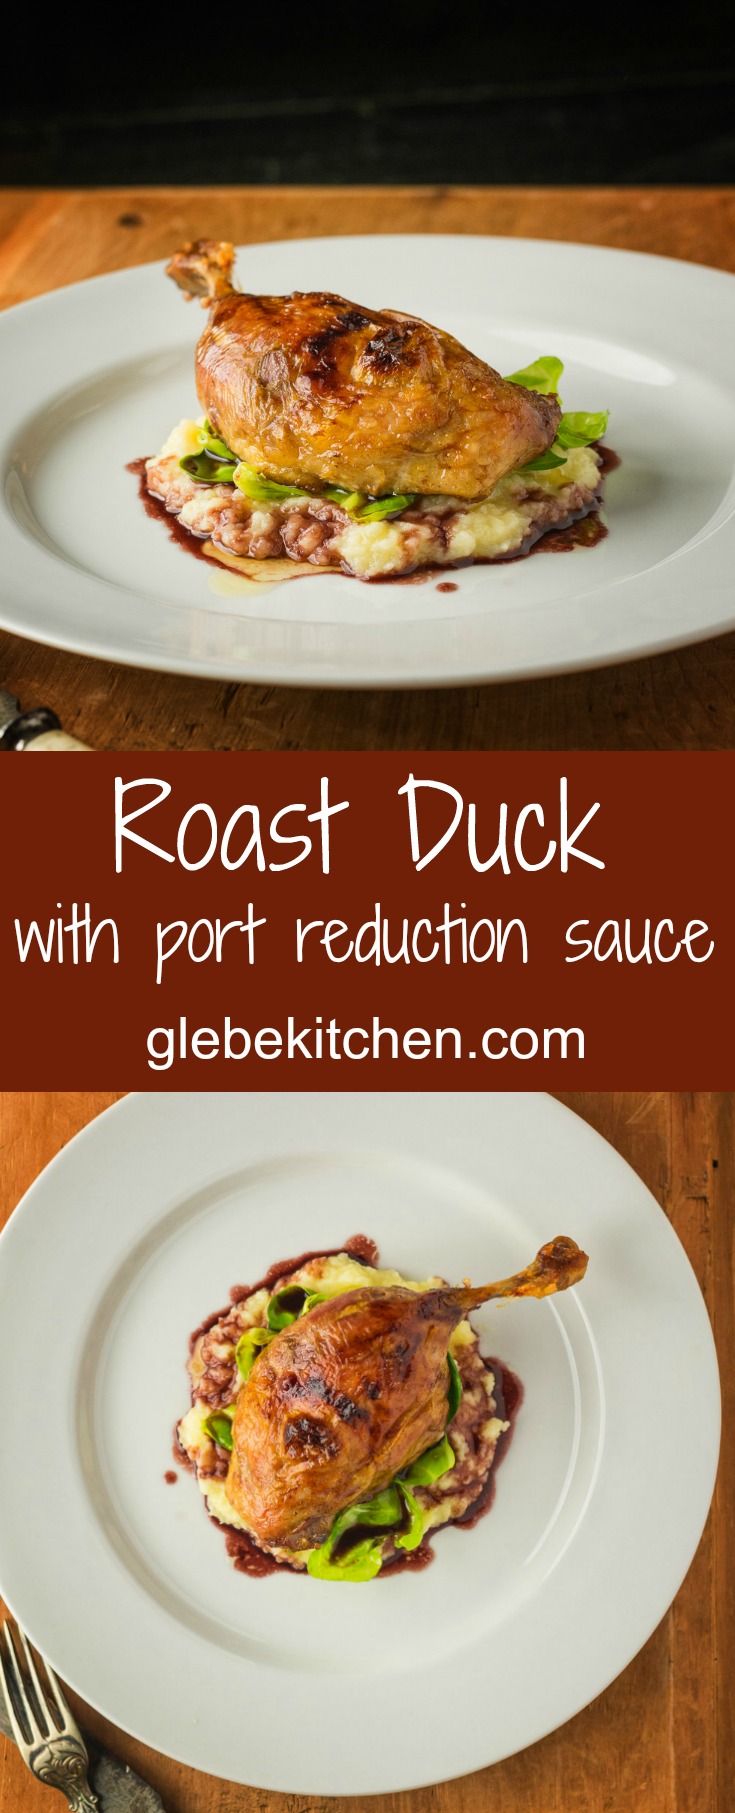 Roast duck legs with port wine reduction sauce